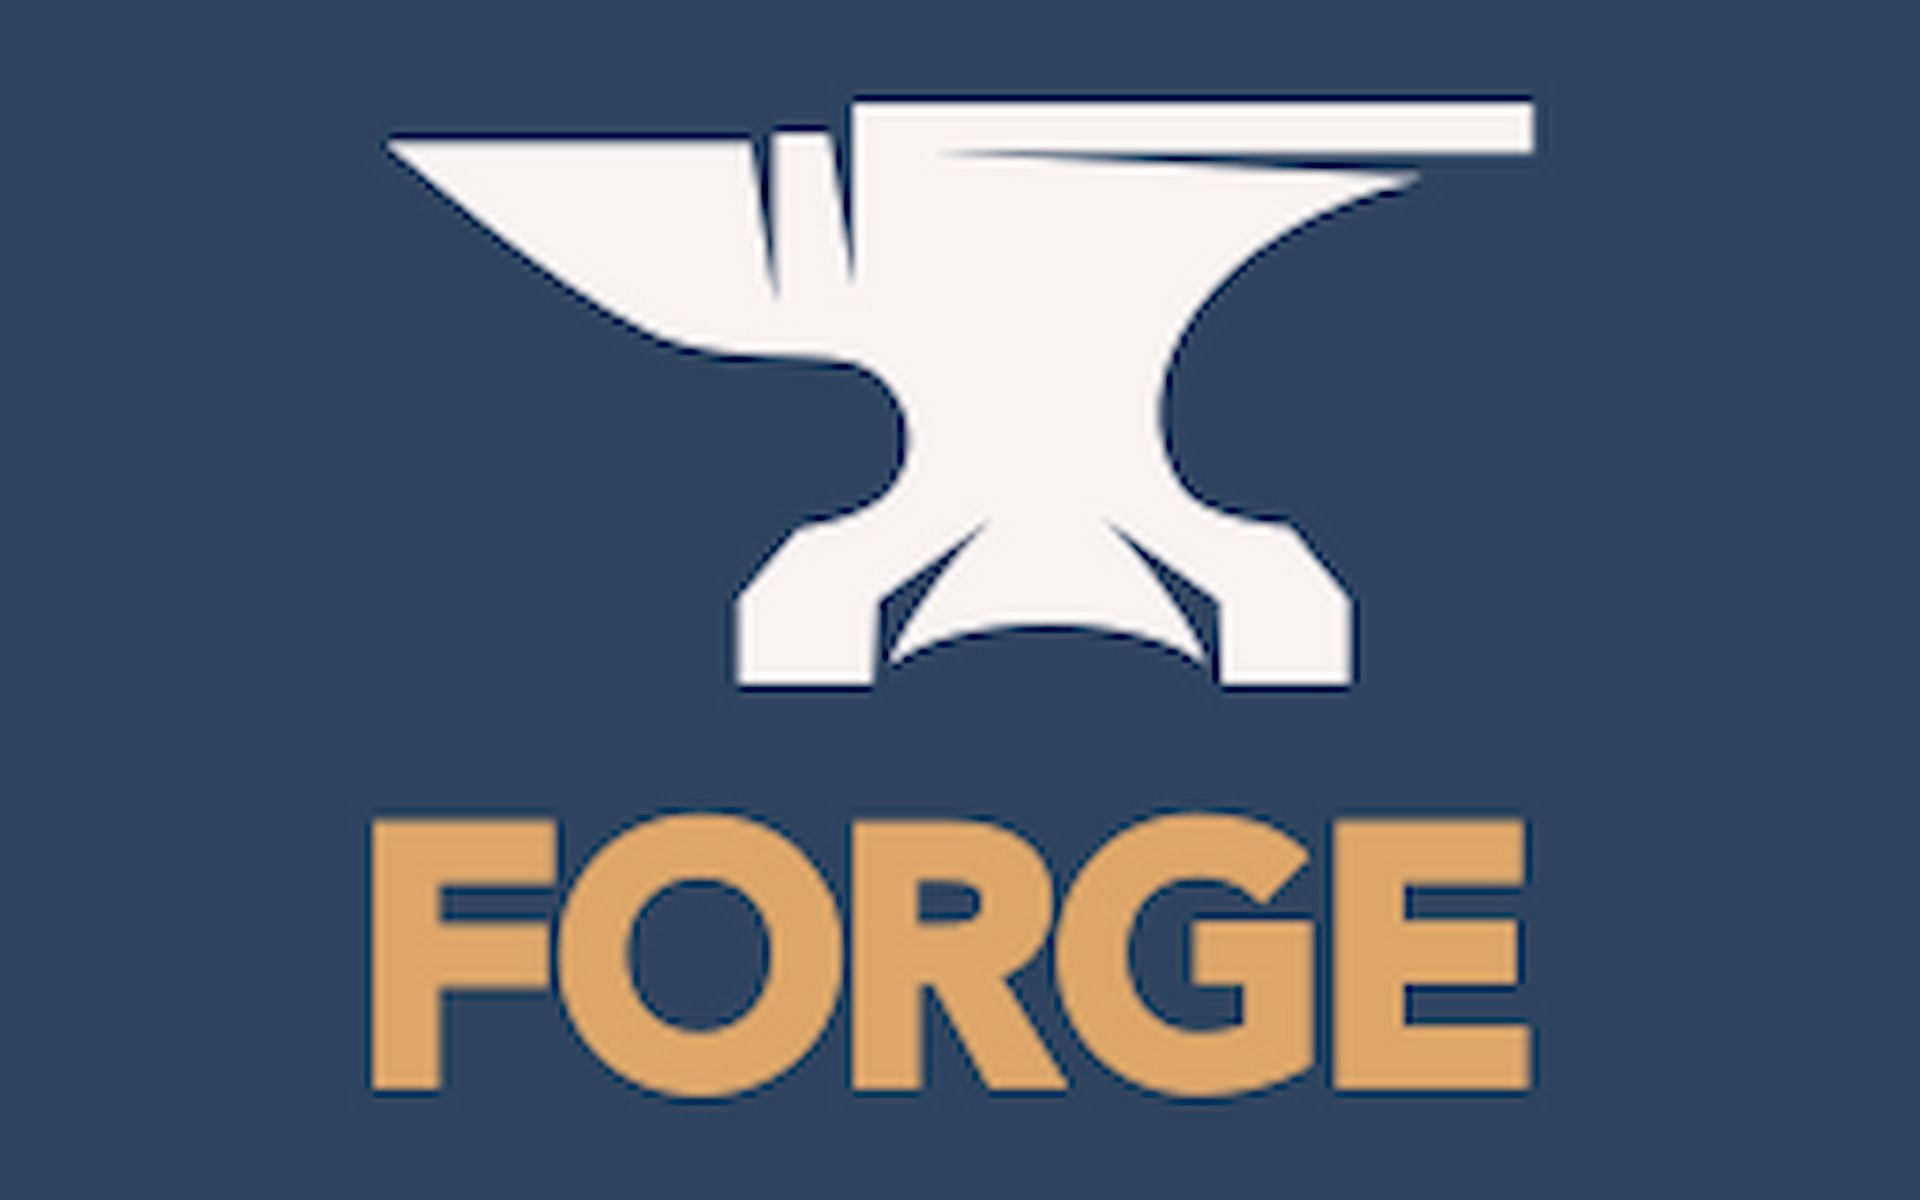 Forge is a versatile platform for getting mods (Image via minecraftforge.net)